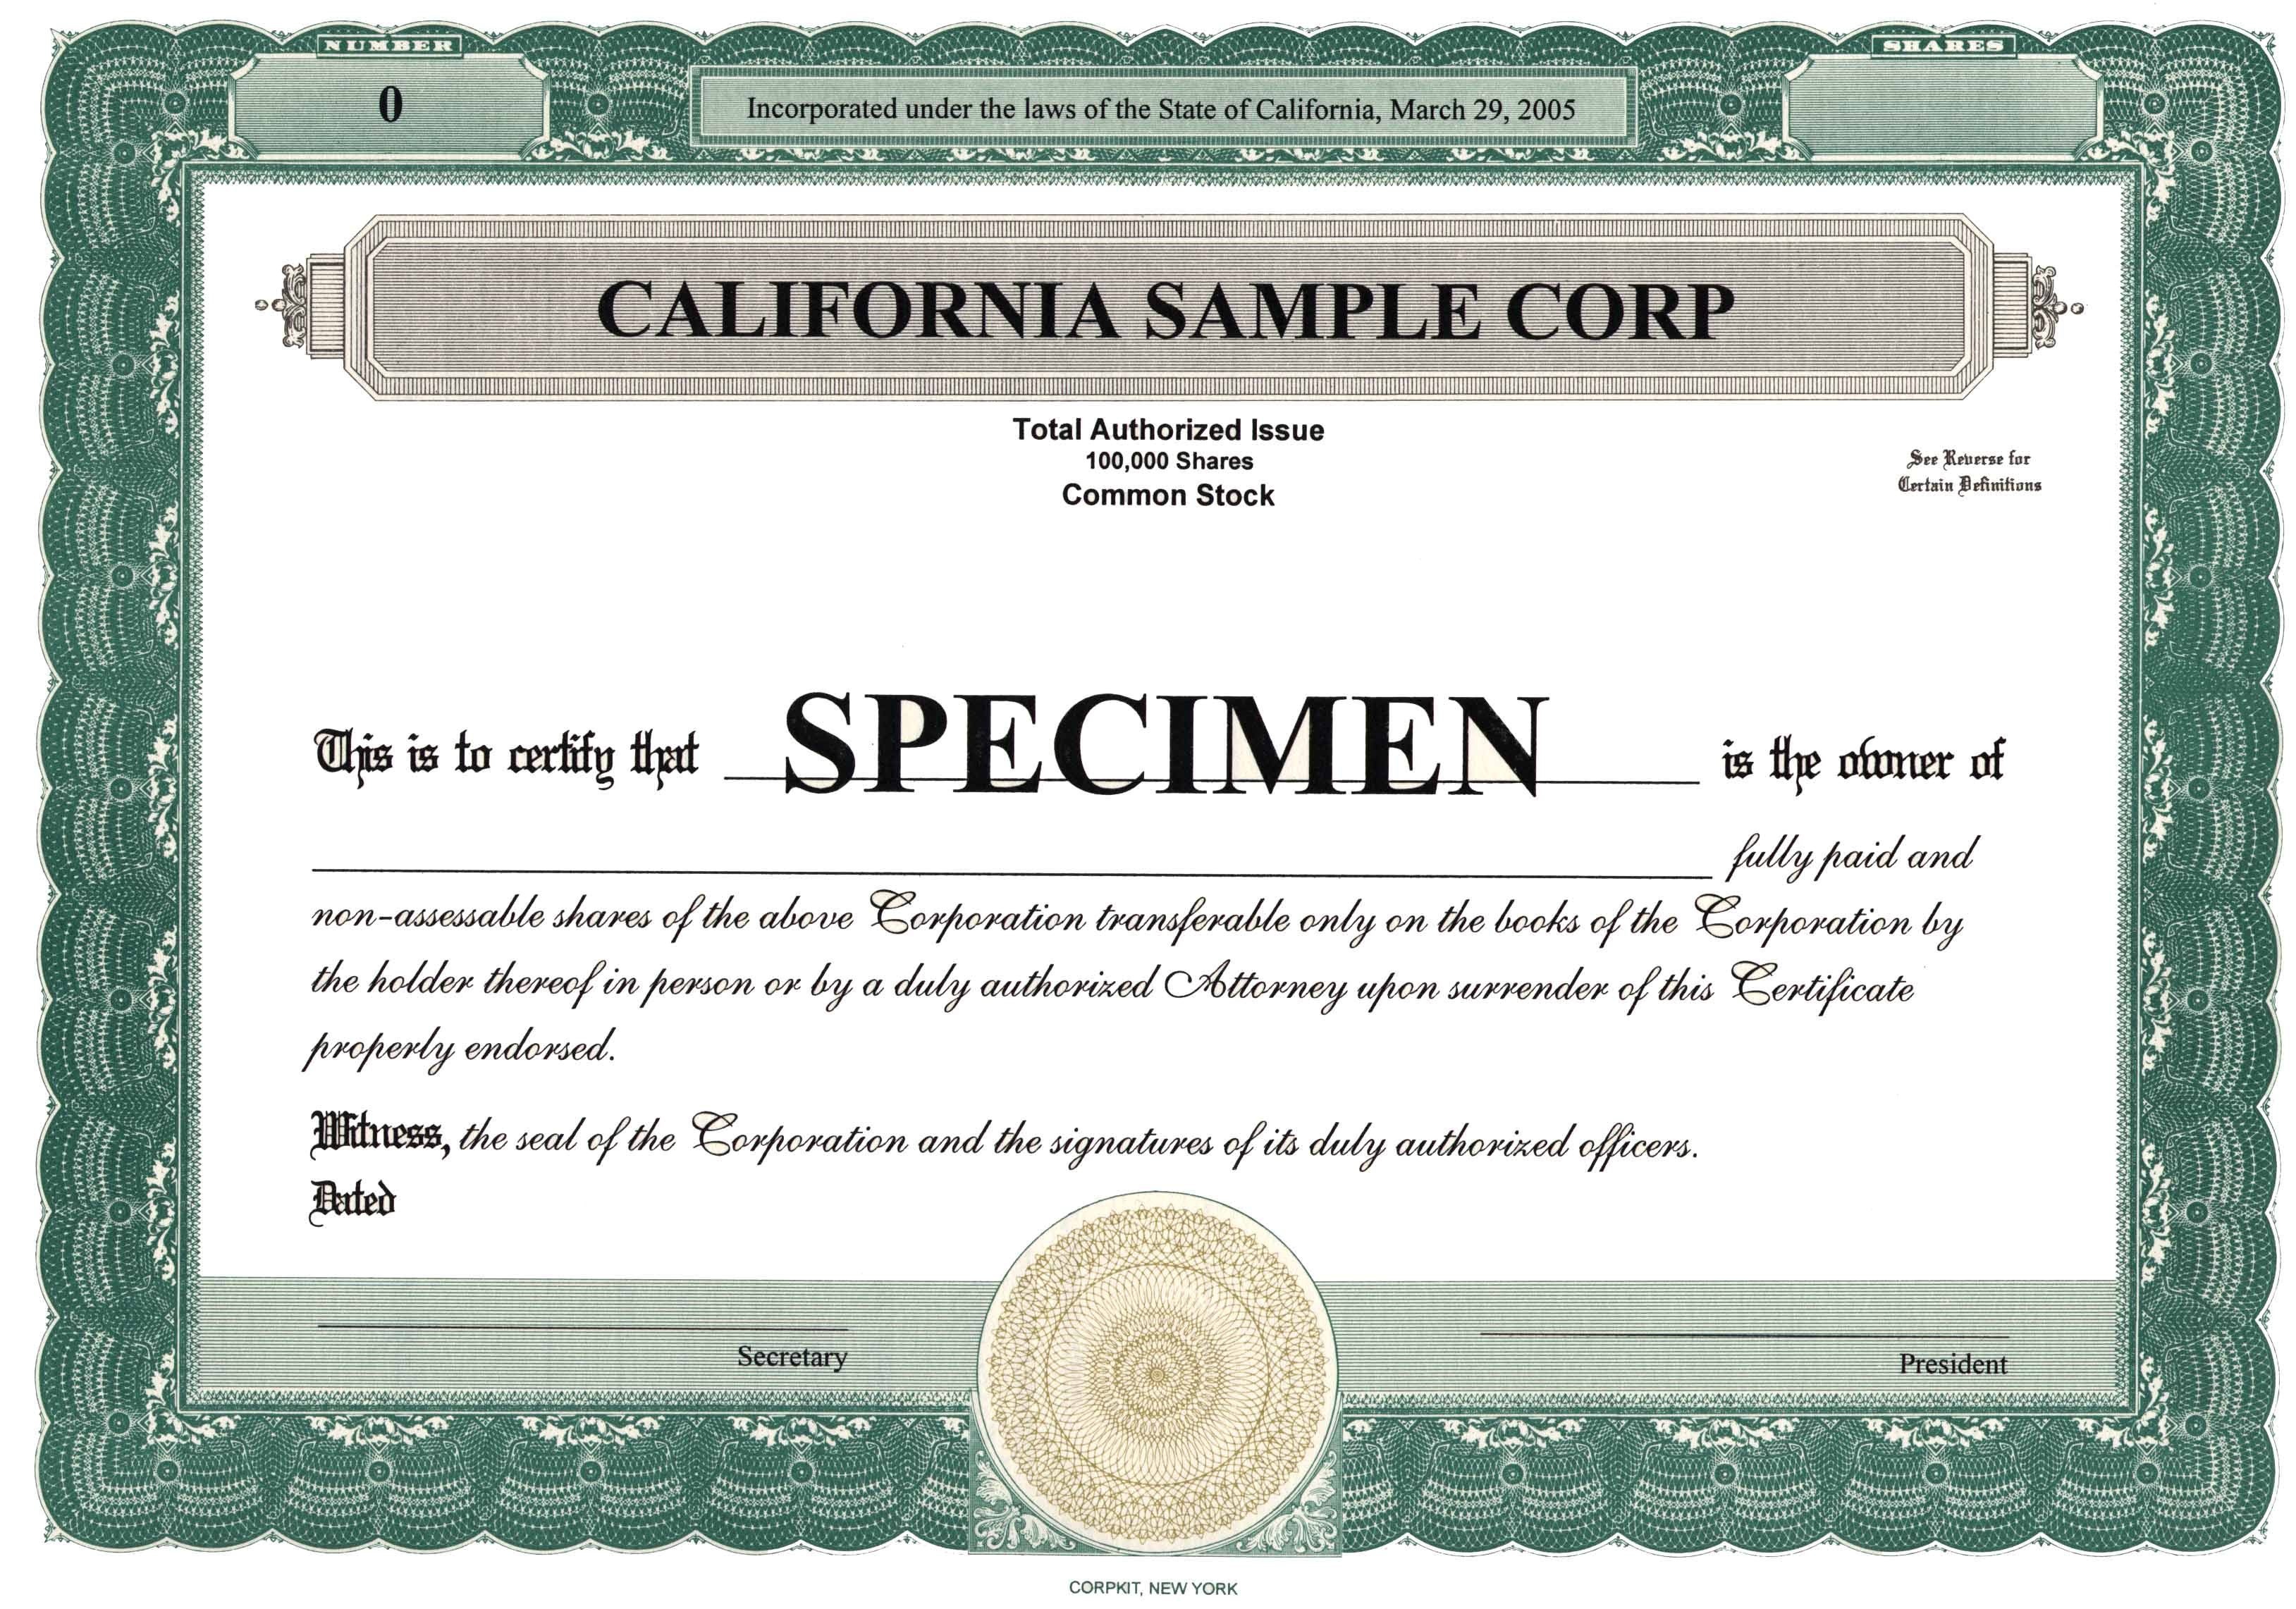 sharestock certificate sample